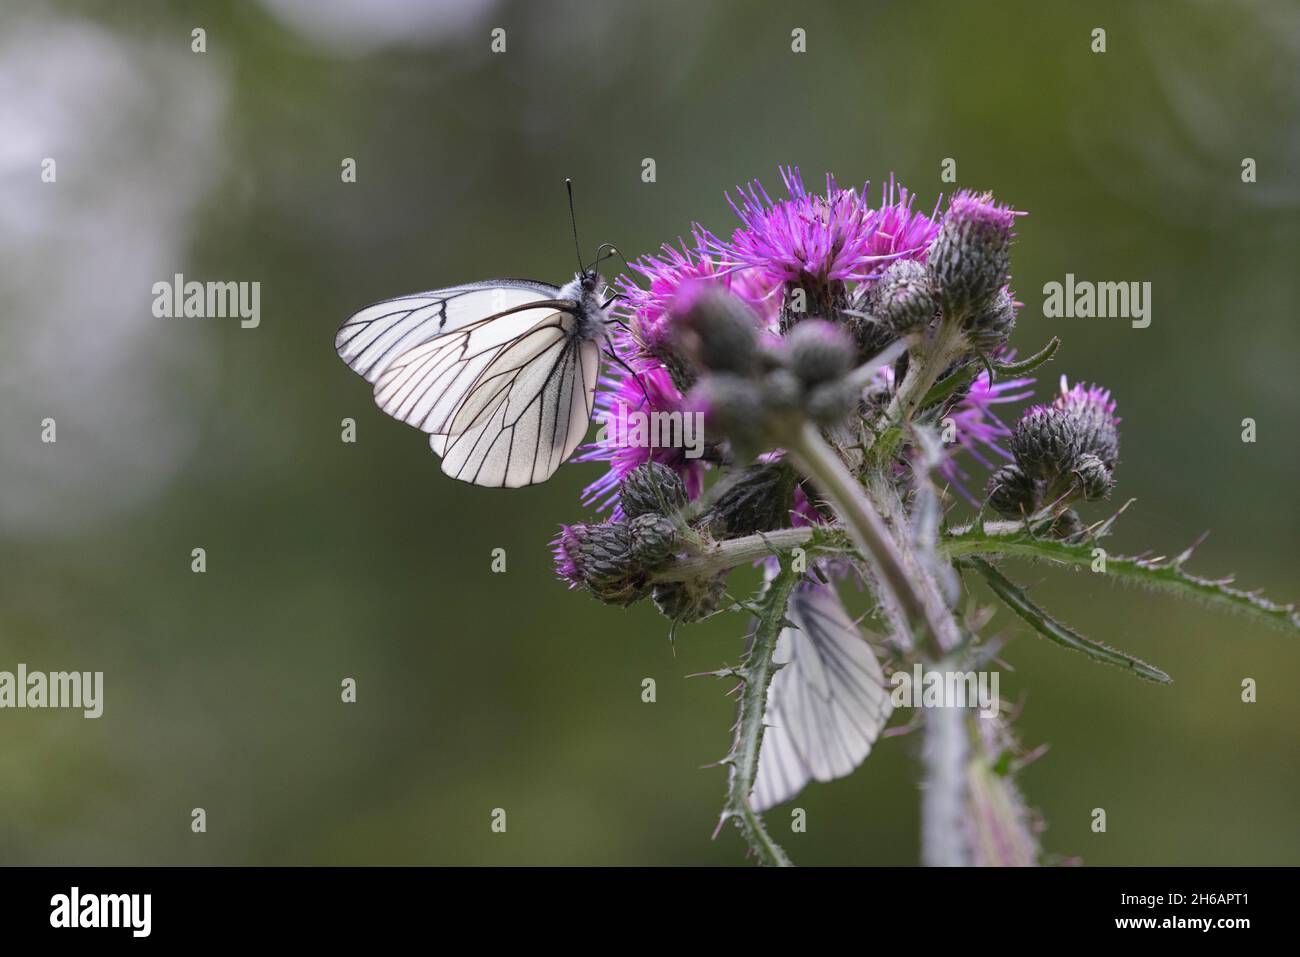 Aporia crataegi, the black-veined white butterfly on thistle Stock Photo